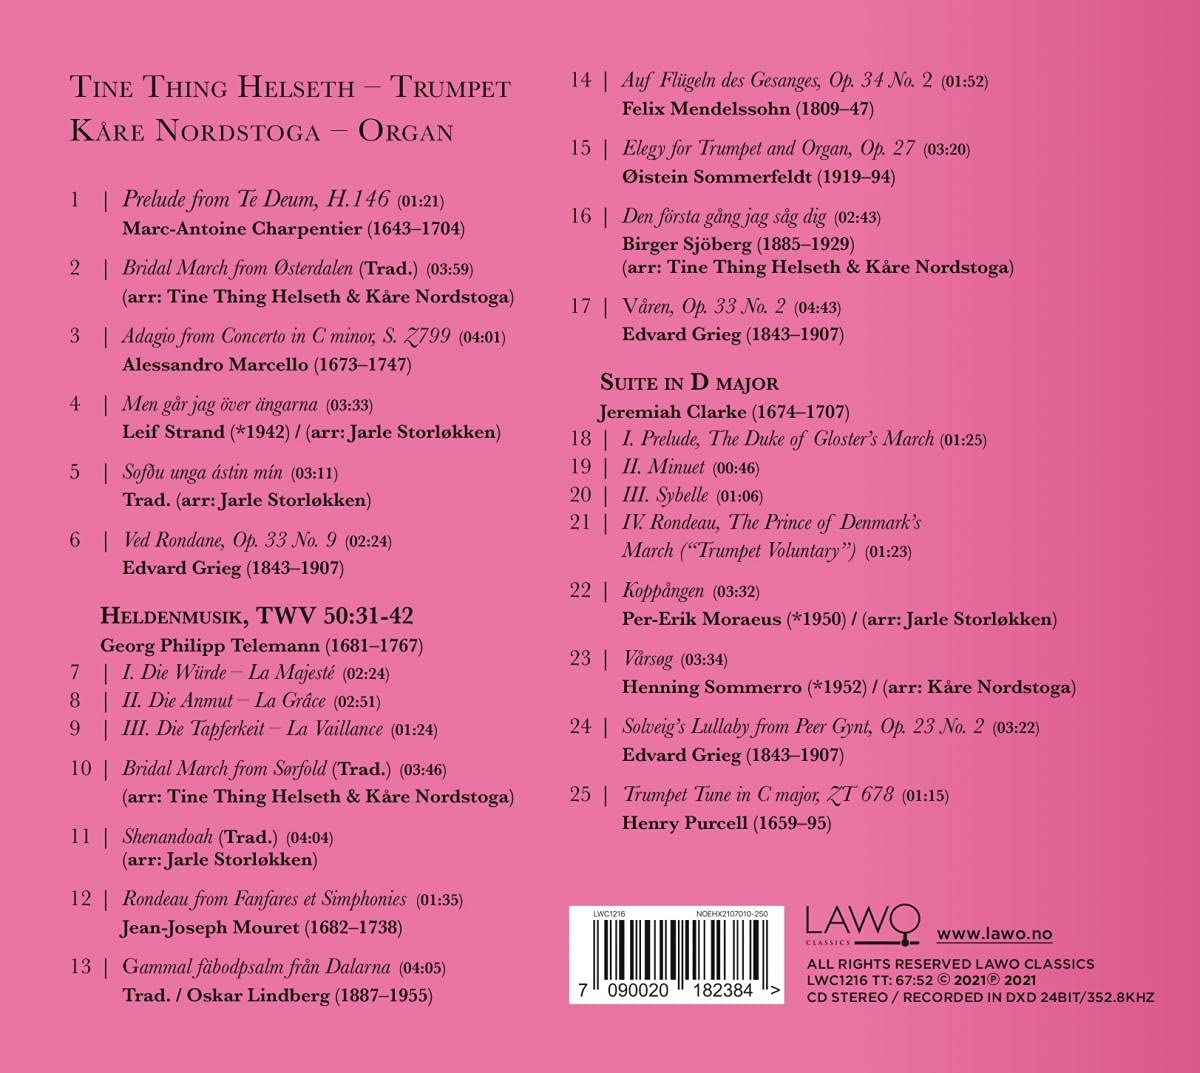 Tine Thing Helseth / Kare Nordstoga 트럼펫과 오르간으로 연주하는 추억의 명곡집 (Magical Memories For Trumpet and Organ) 